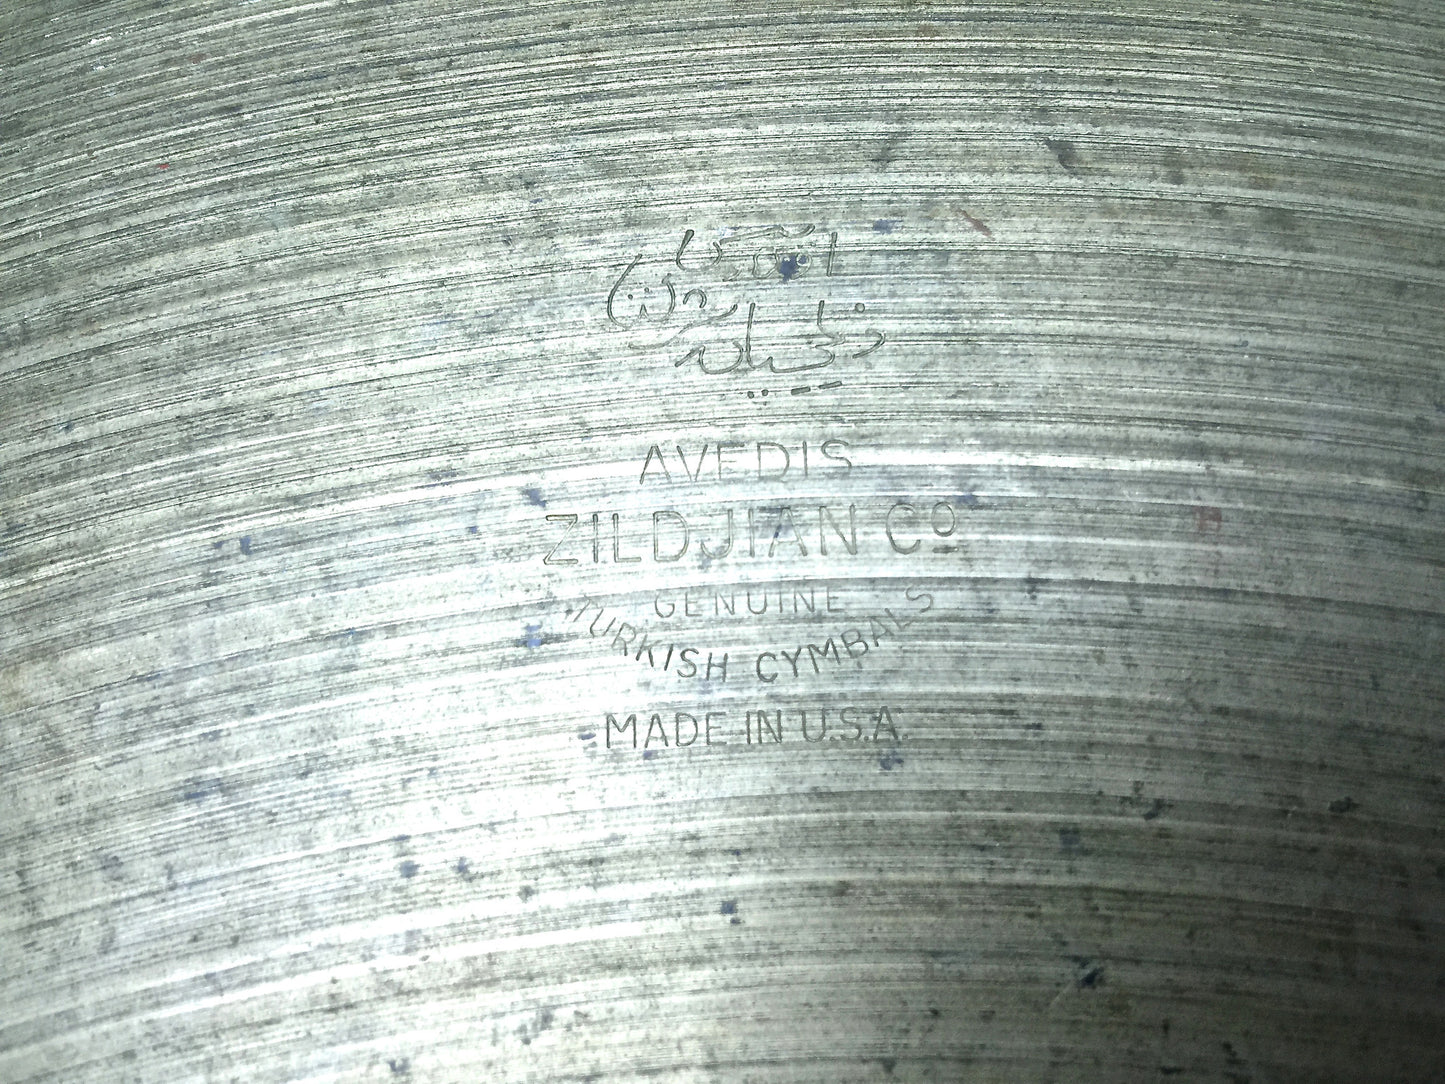 20" 1950's Zildjian A Ride Cymbal 2244g - Inventory # 157